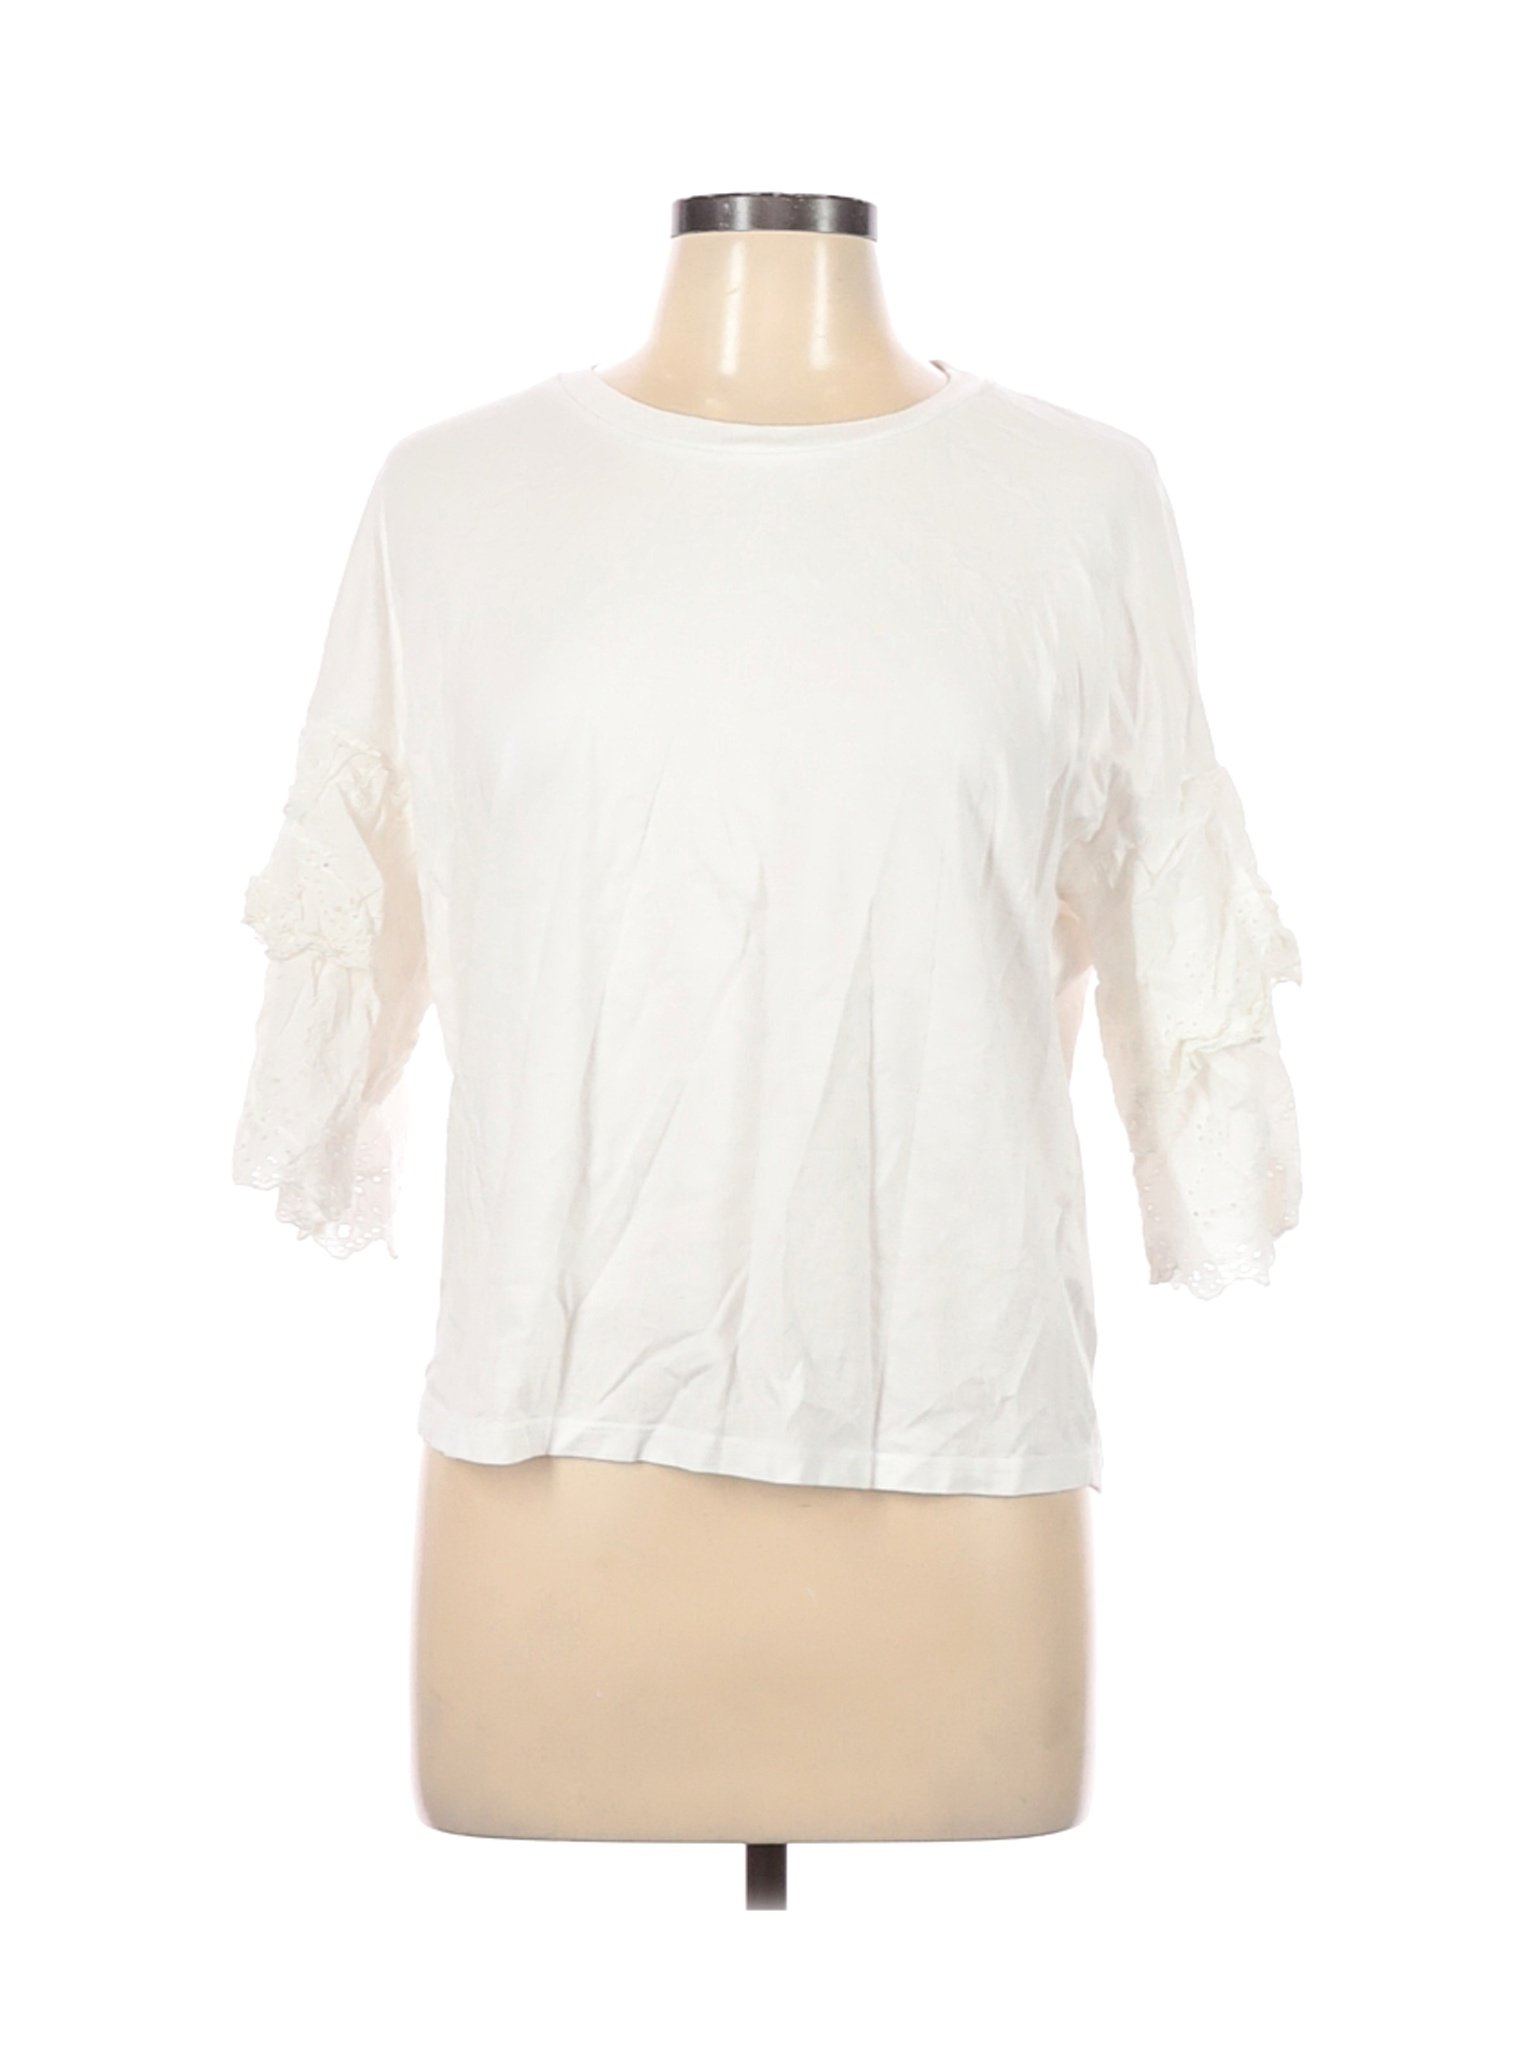 Topshop Women White 3/4 Sleeve Top 10 | eBay